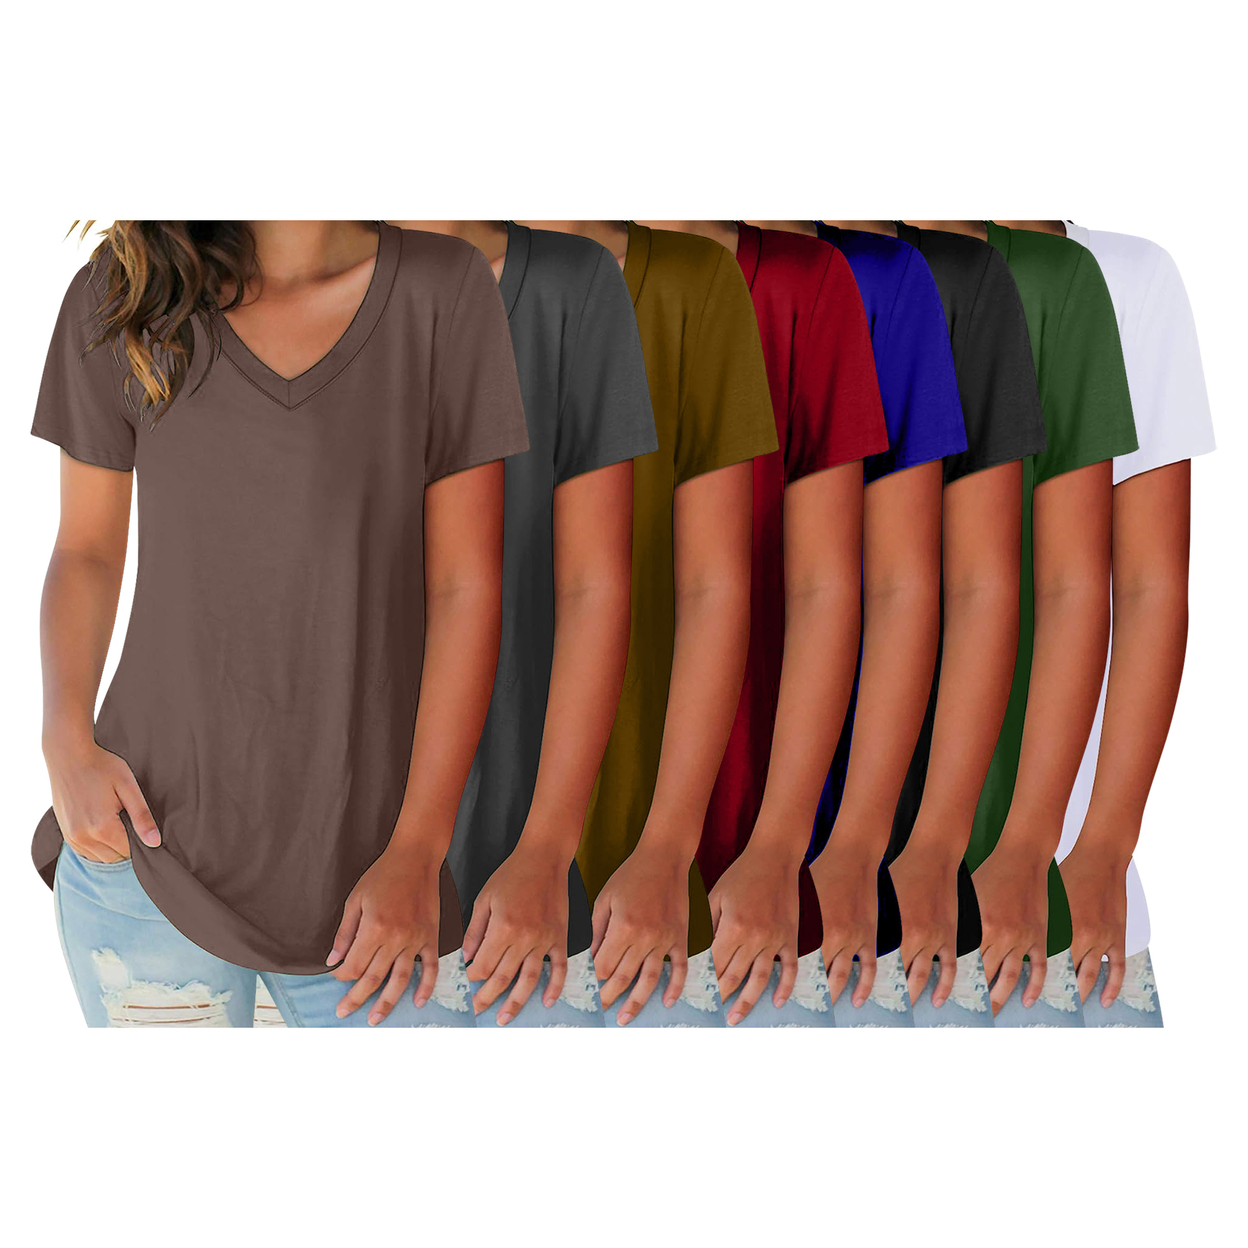 2-Pack: Women's Ultra Soft Smooth Cotton Blend Basic V-Neck Short Sleeve Shirts - Black & Navy, Xx-large